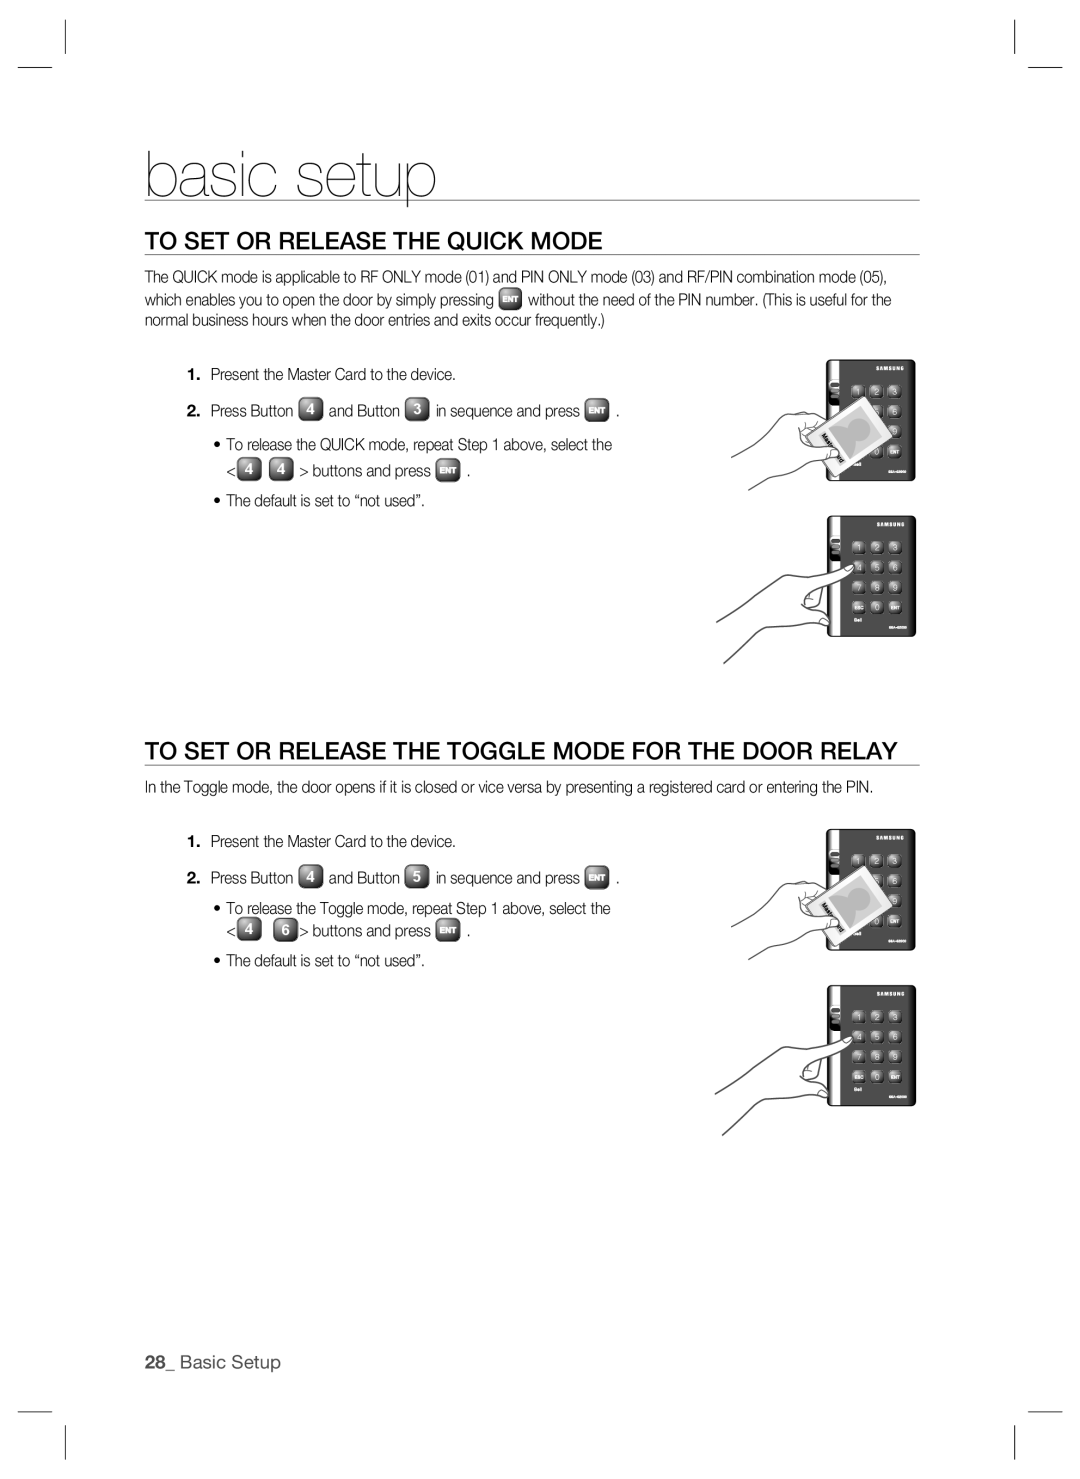 Samsung SSA-S2000W user manual To Set Or Release The Quick Mode, 28_ Basic Setup, basic setup 